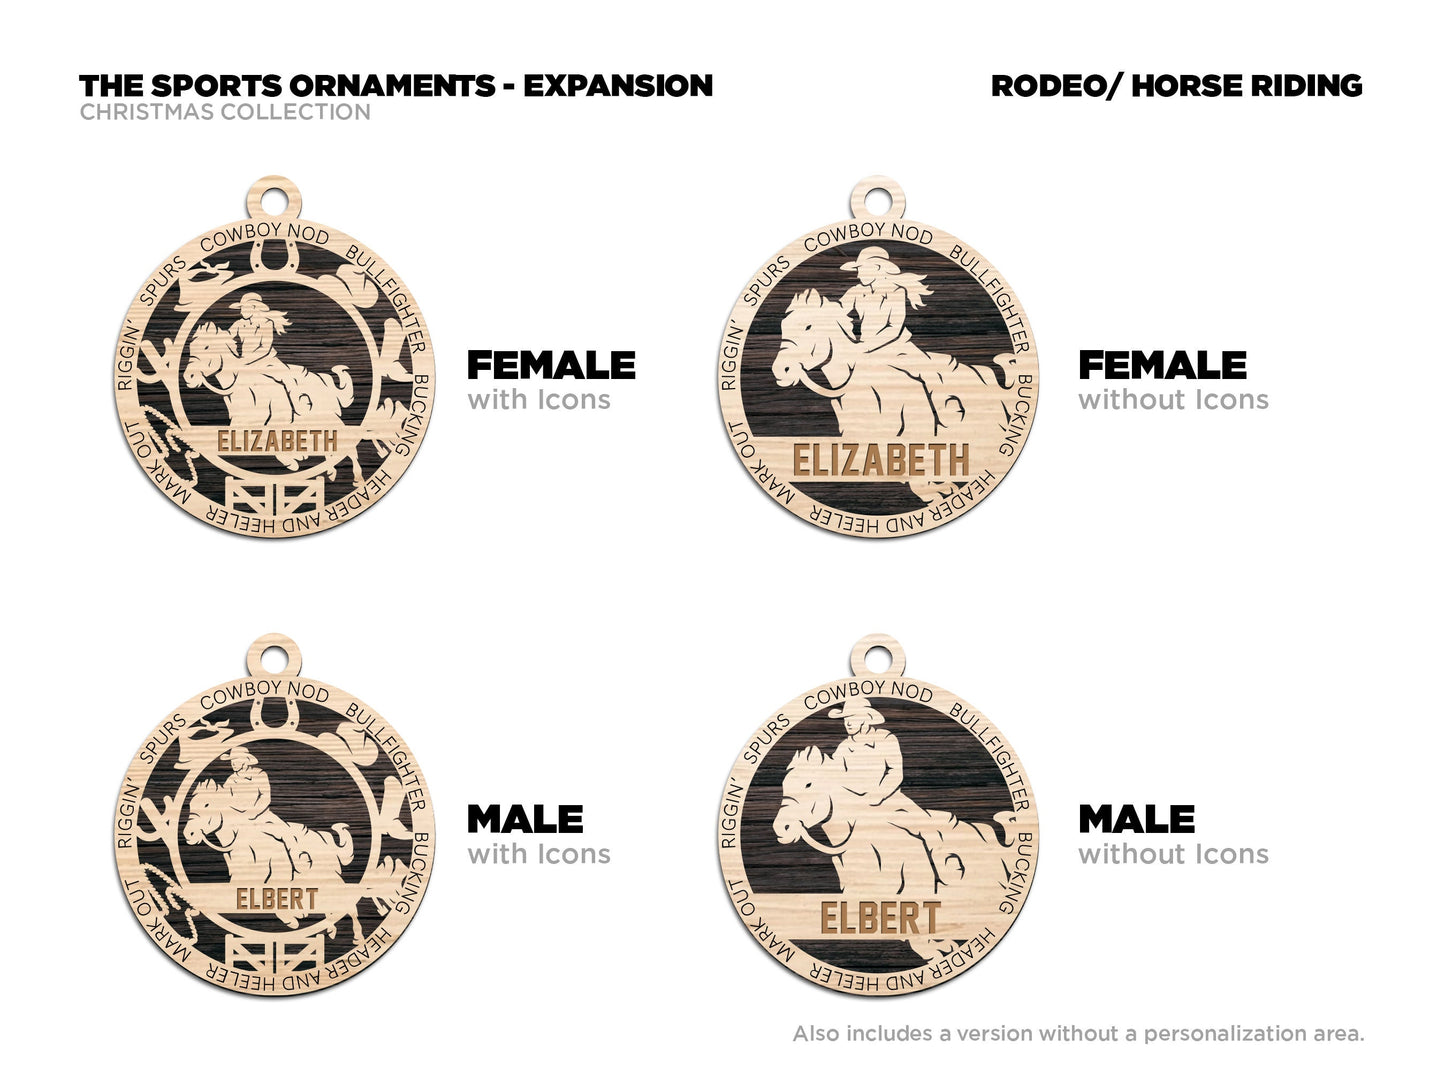 Horse Riding - Stadium Series Ornaments - 4 Unique designs - SVG, PDF, AI File Download - Sized for Glowforge